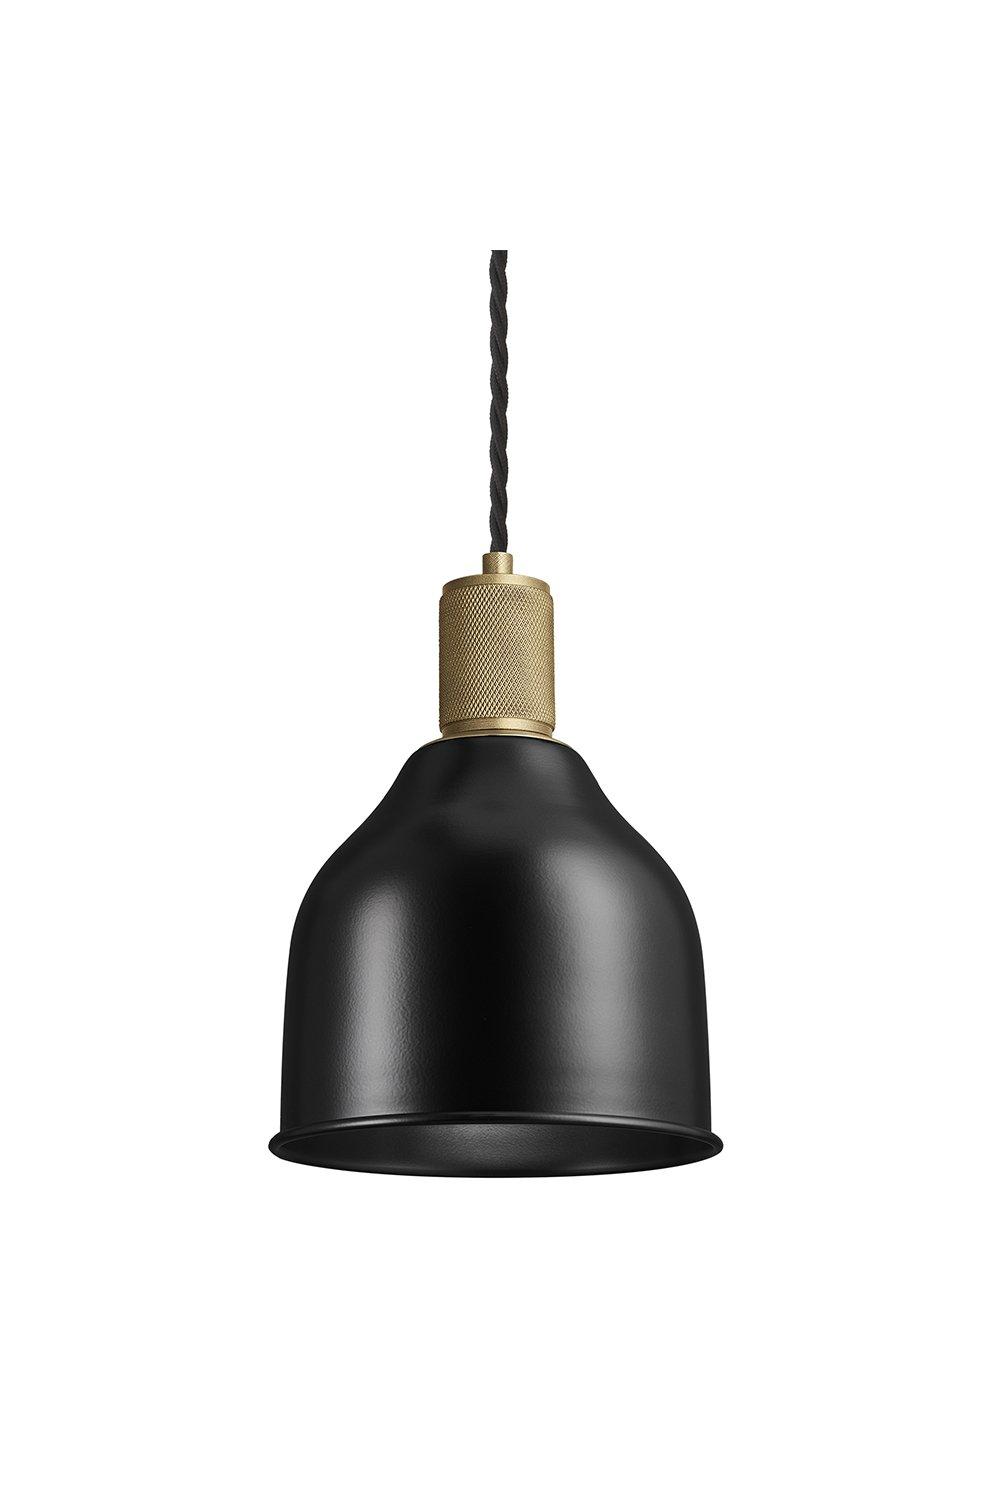 Knurled Cone Pendant Light, 7 Inch, Black, Brass Holder